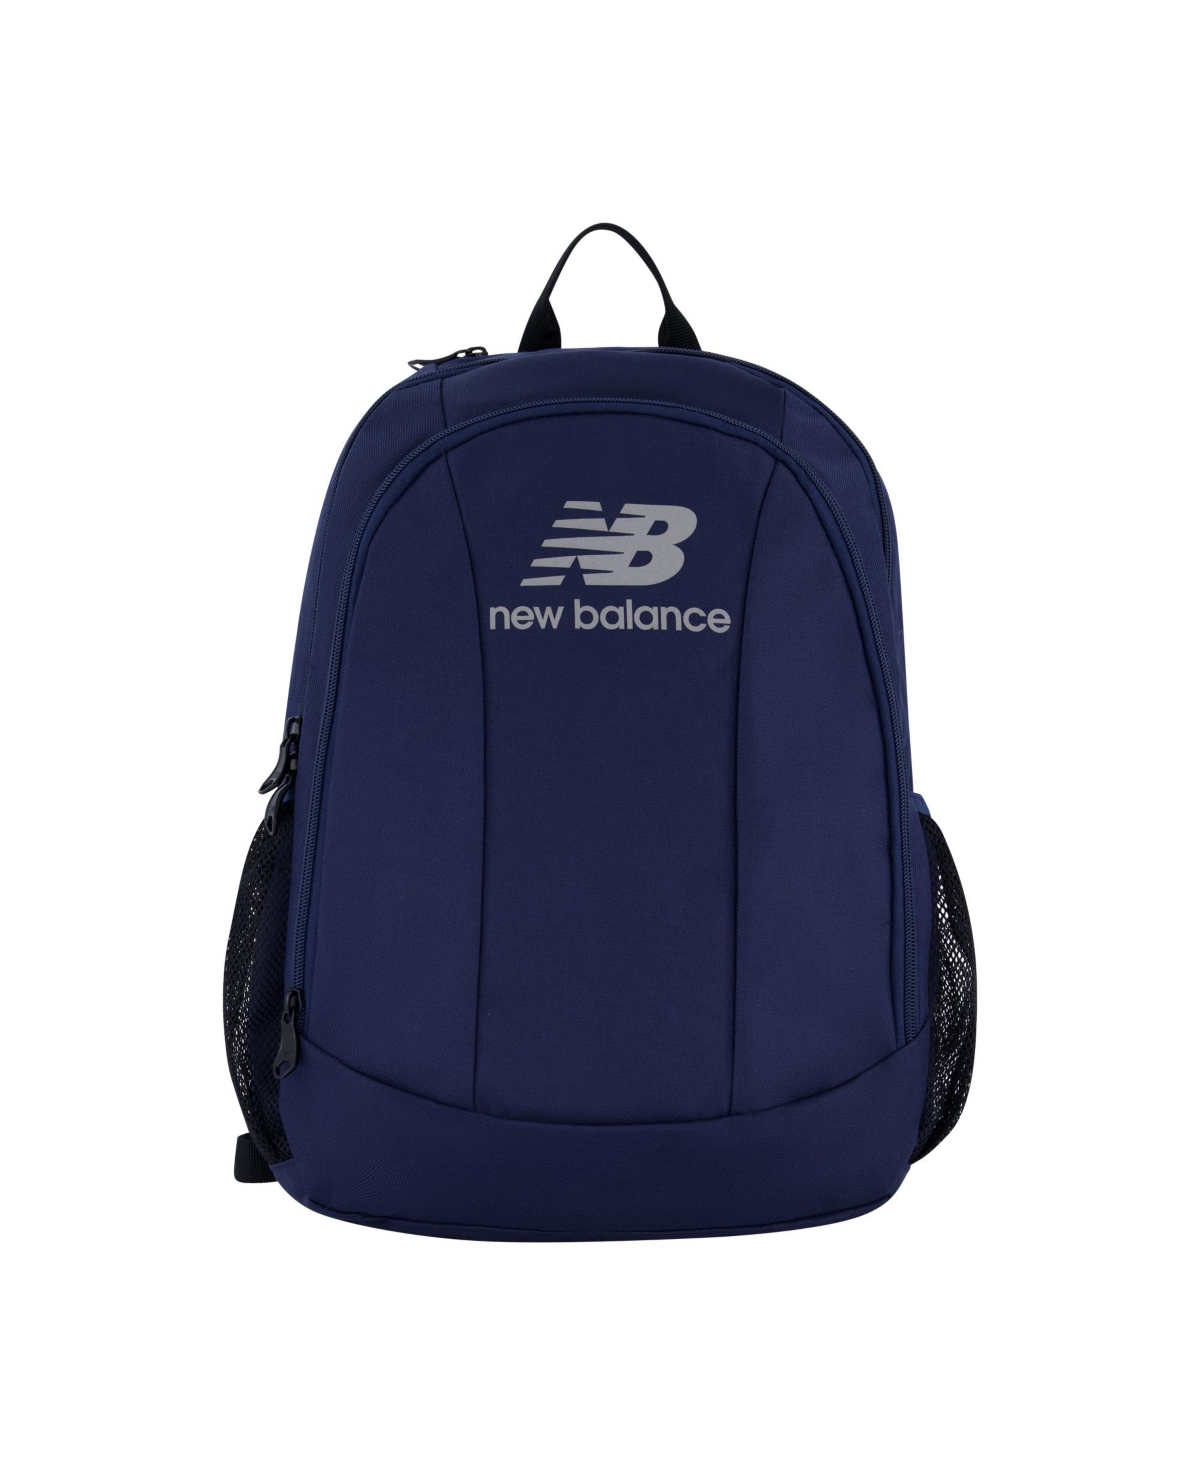 19" Laptop Backpack - Tan